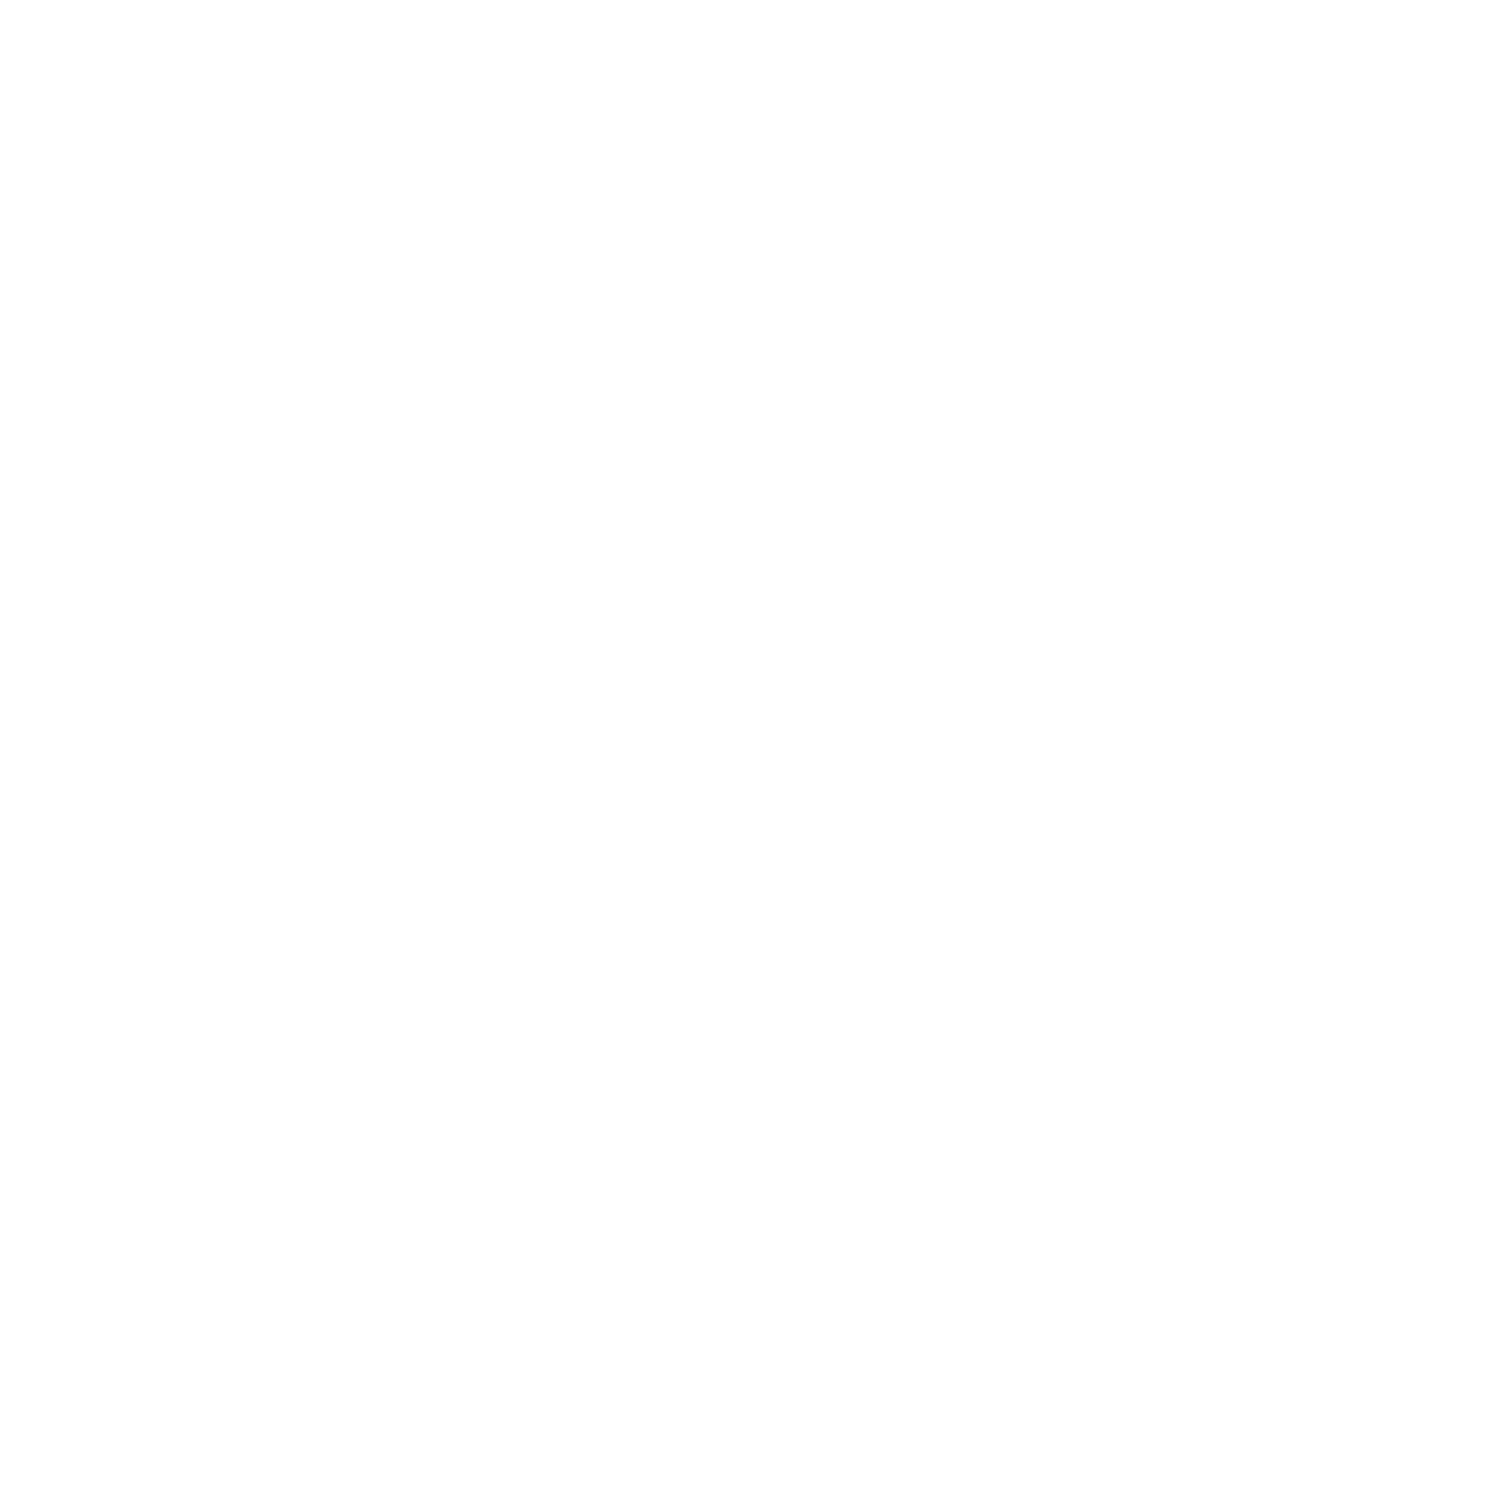 Caan Rose Estates Ltd - Slough : Letting agents in Eton Berkshire